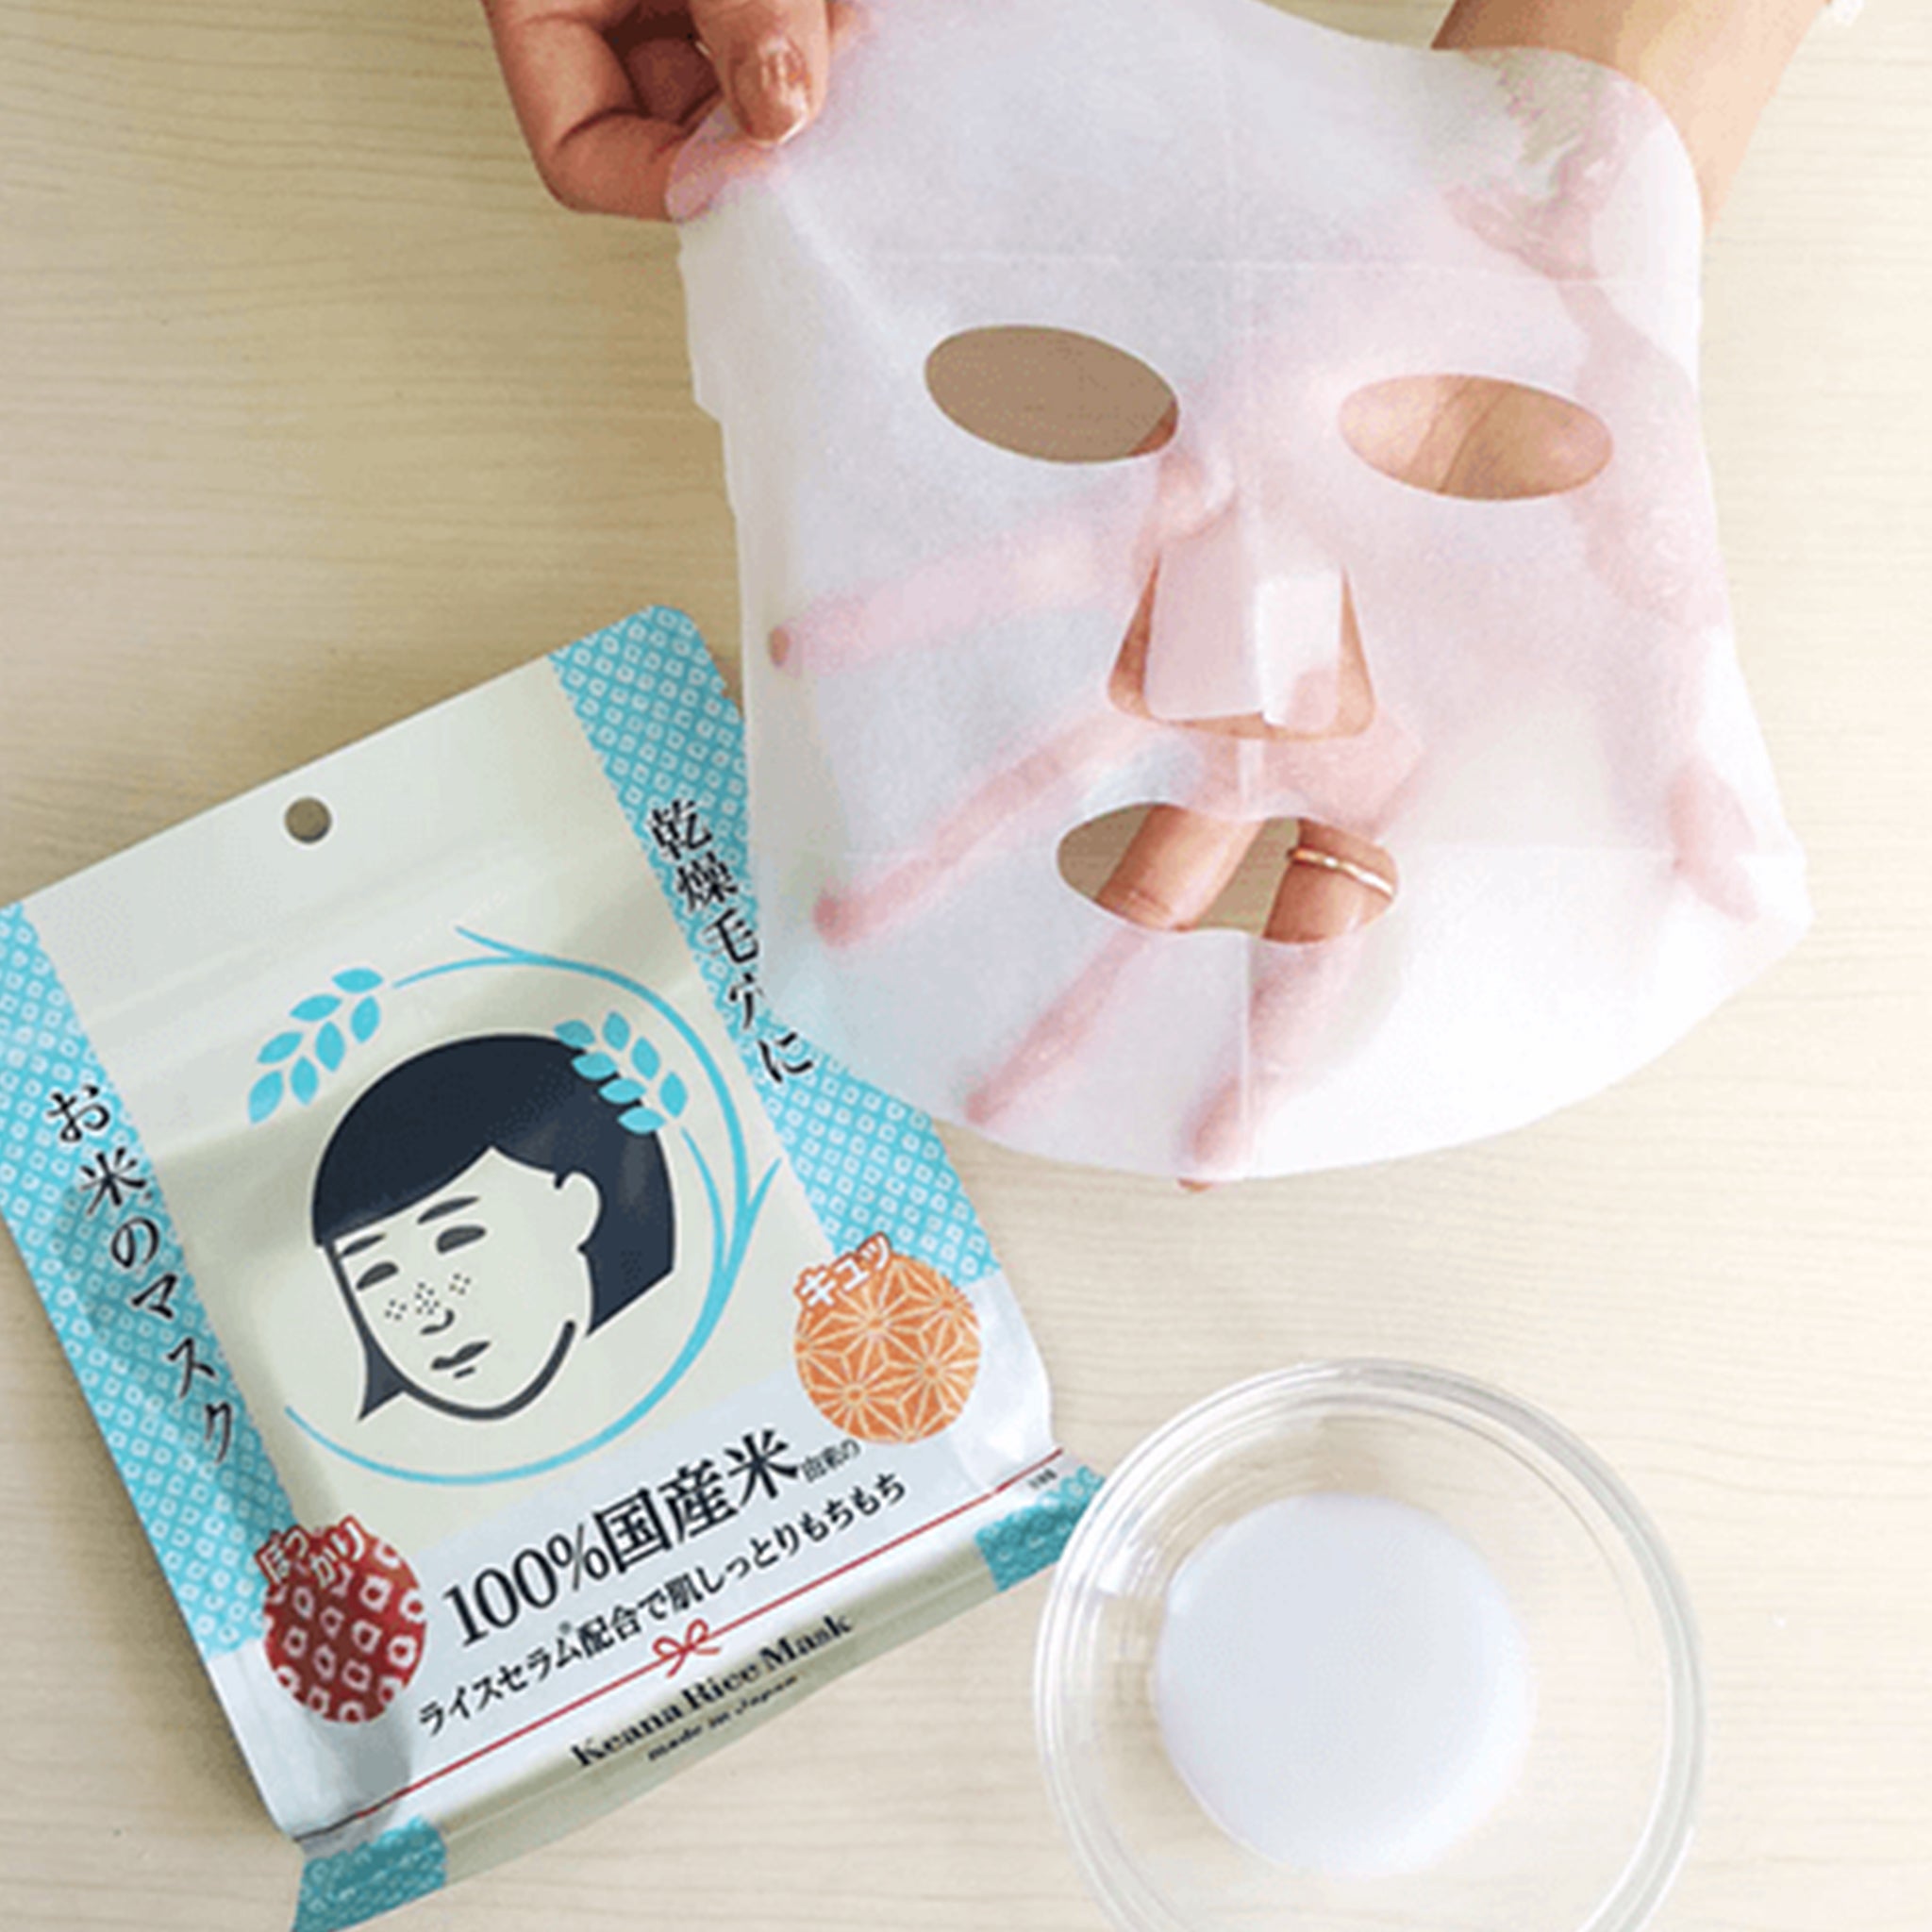 Keana Nadeshiko Facial Treatment Japanese Rice Mask